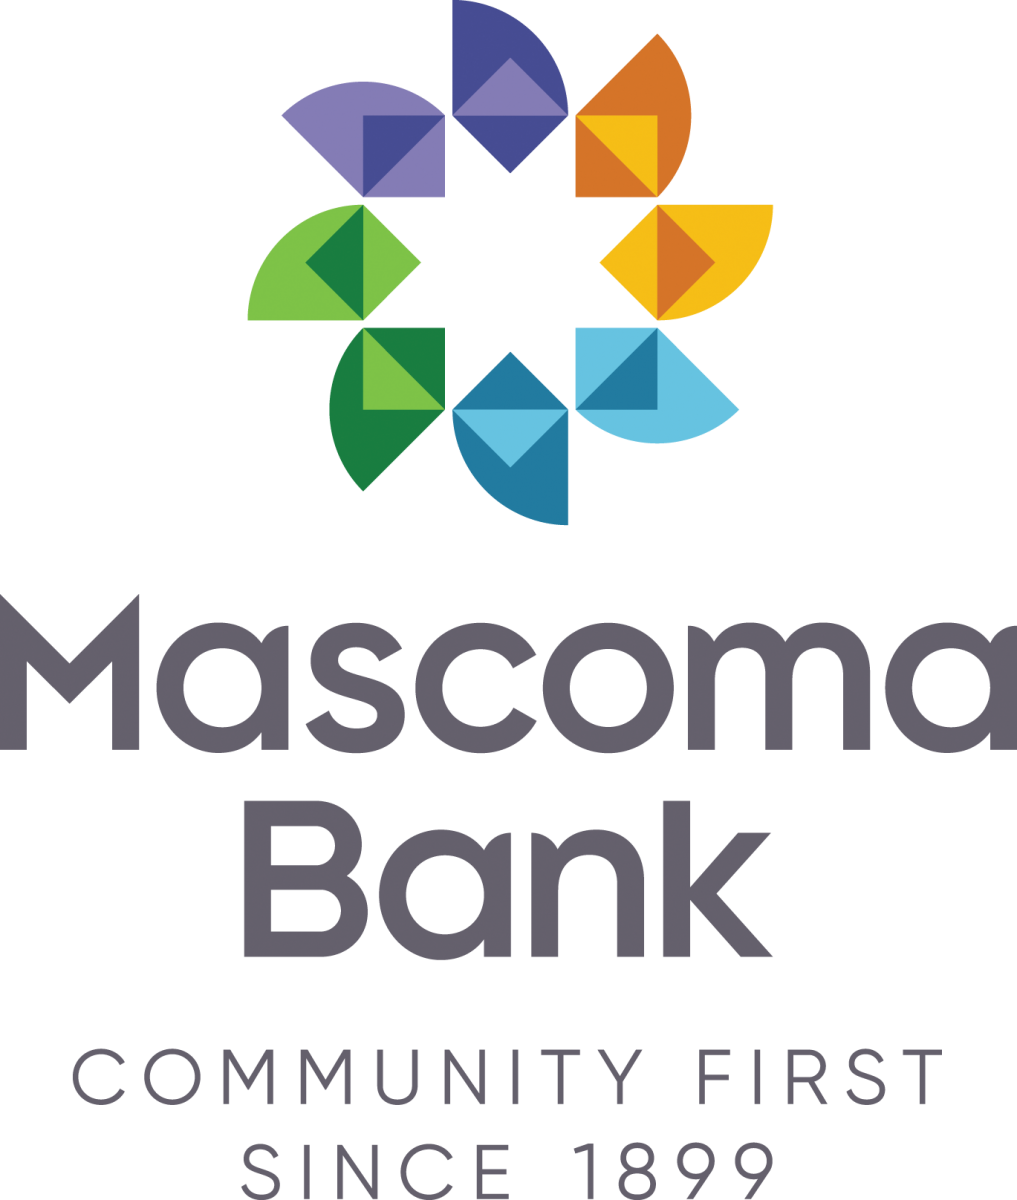 Mascoma Bank: Community First Since 1899